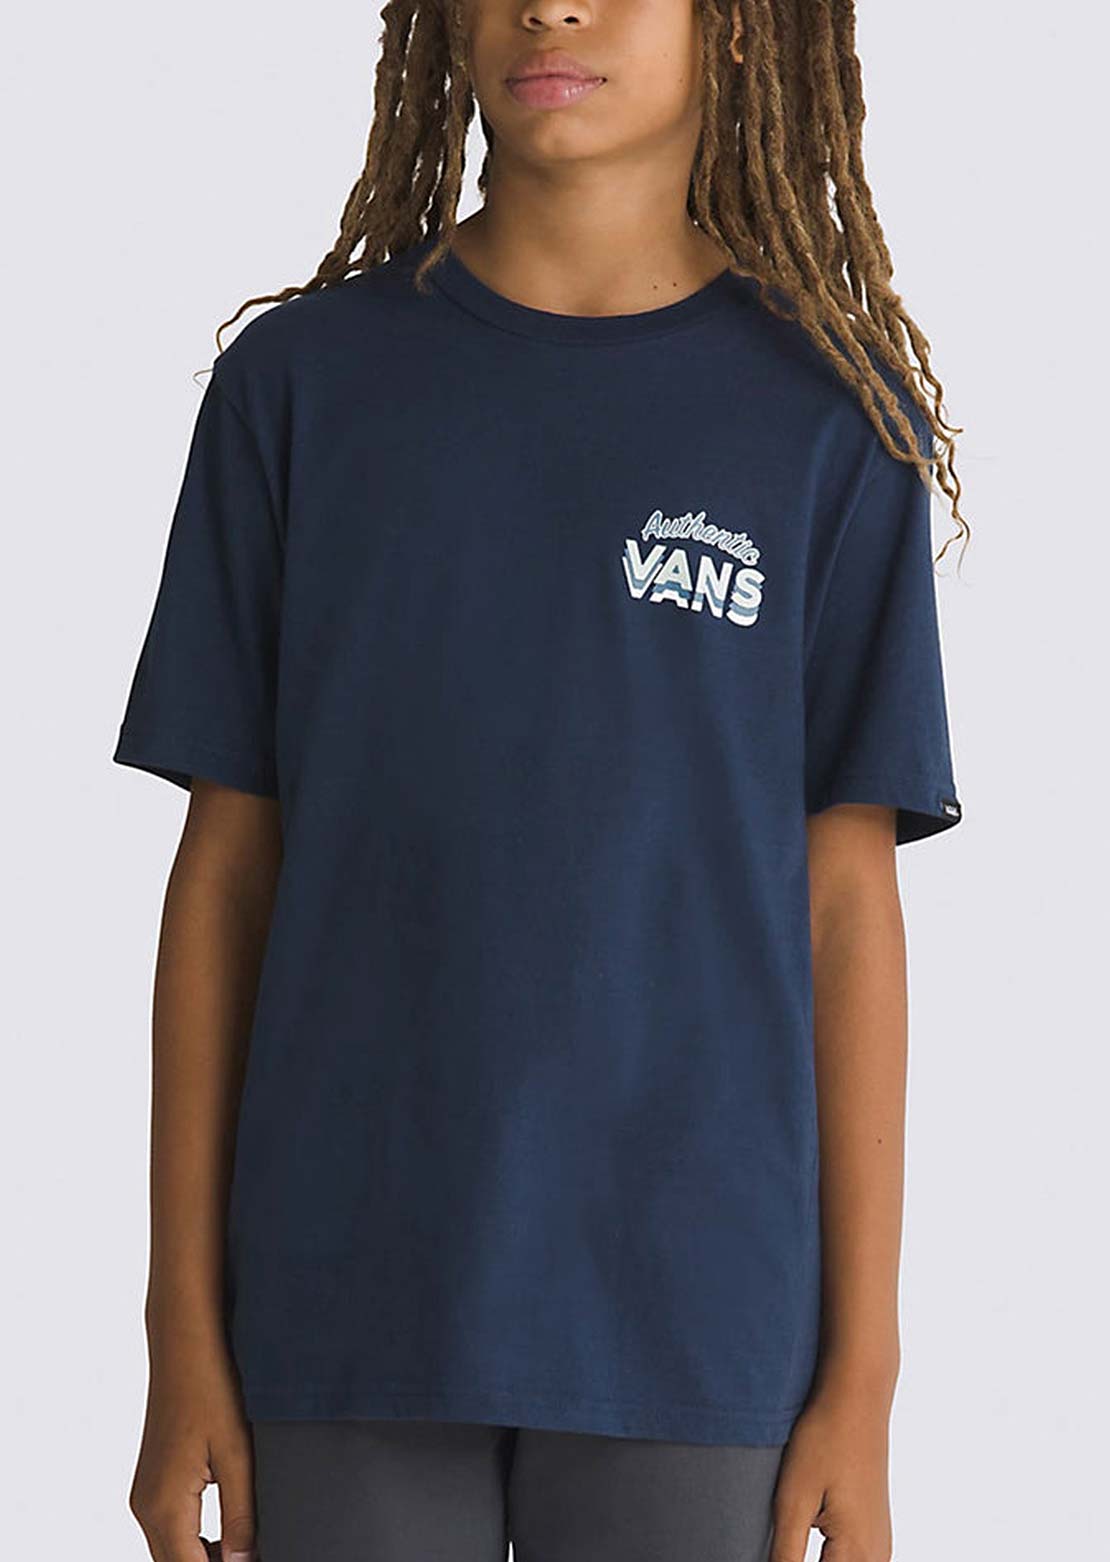 Vans Junior Bodega T-Shirt Dress Blues